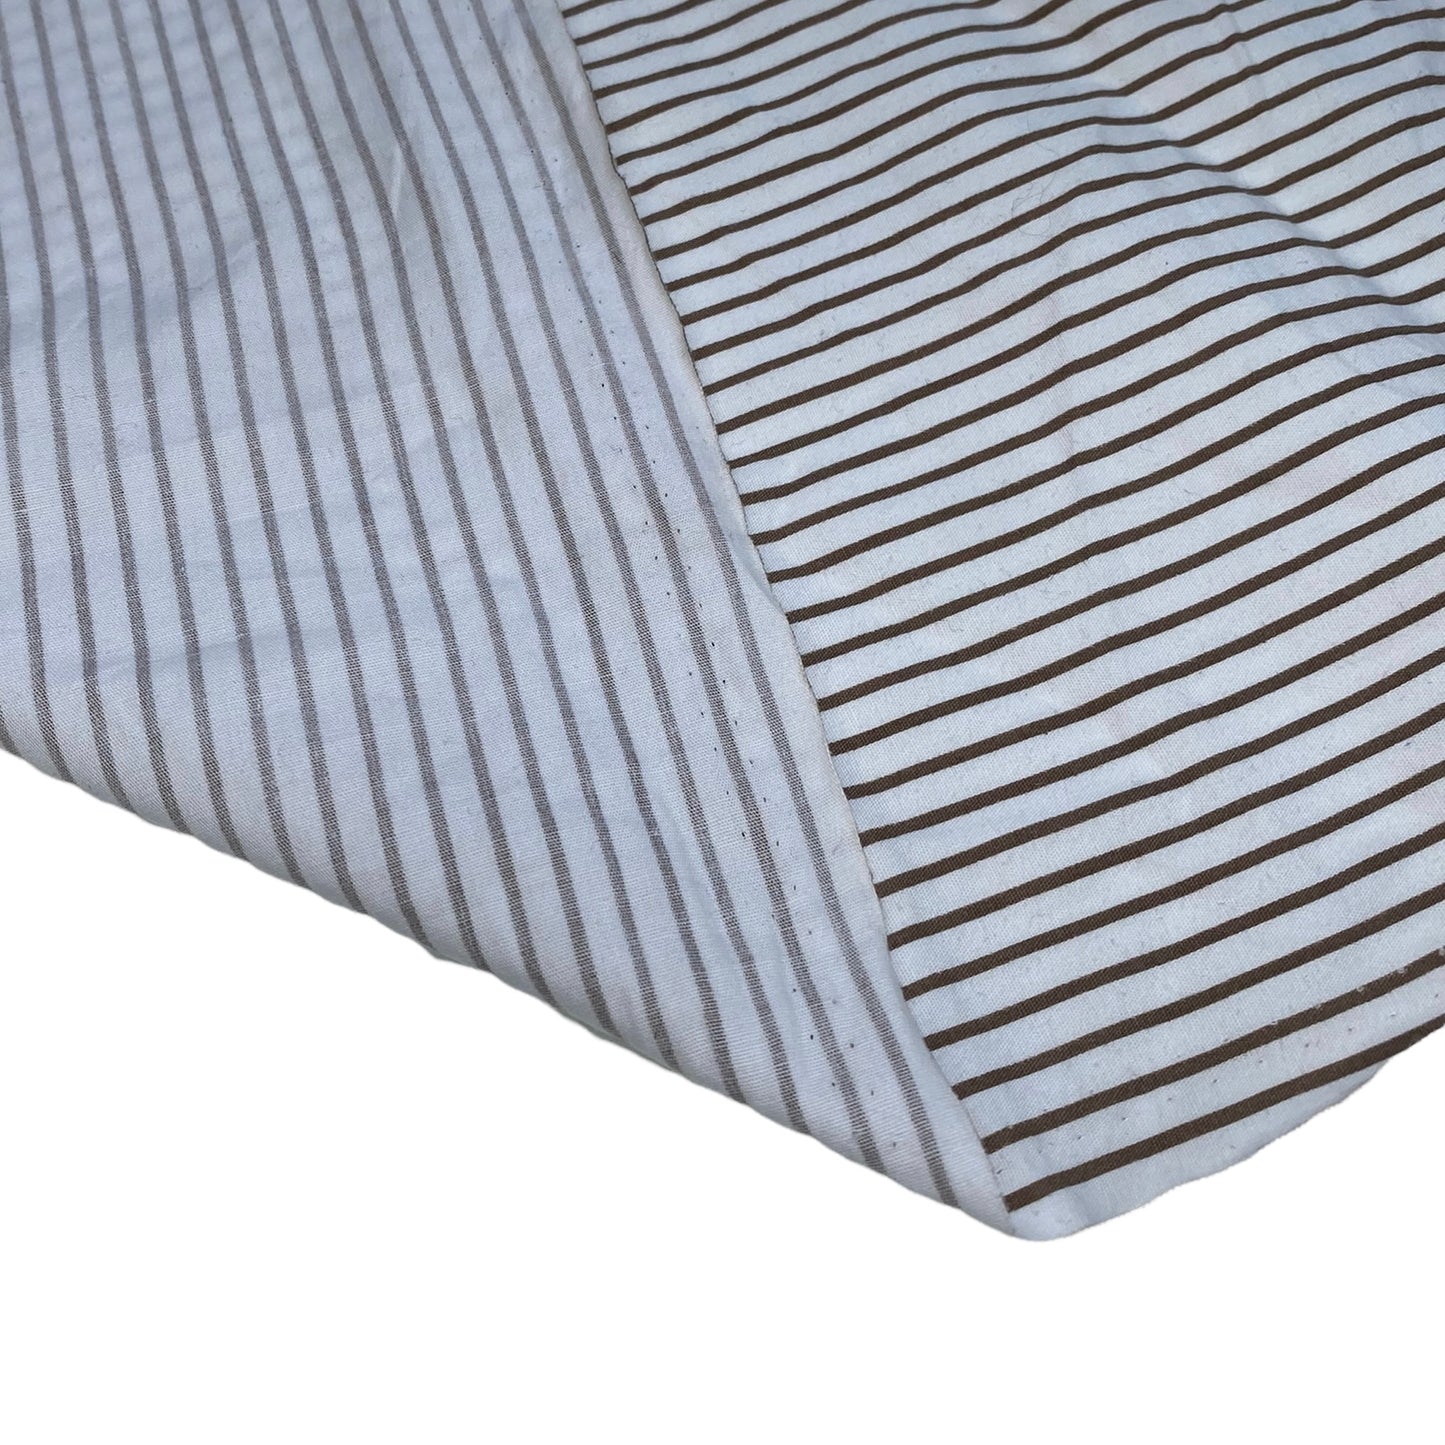 Striped Cotton - 44” - White/Brown